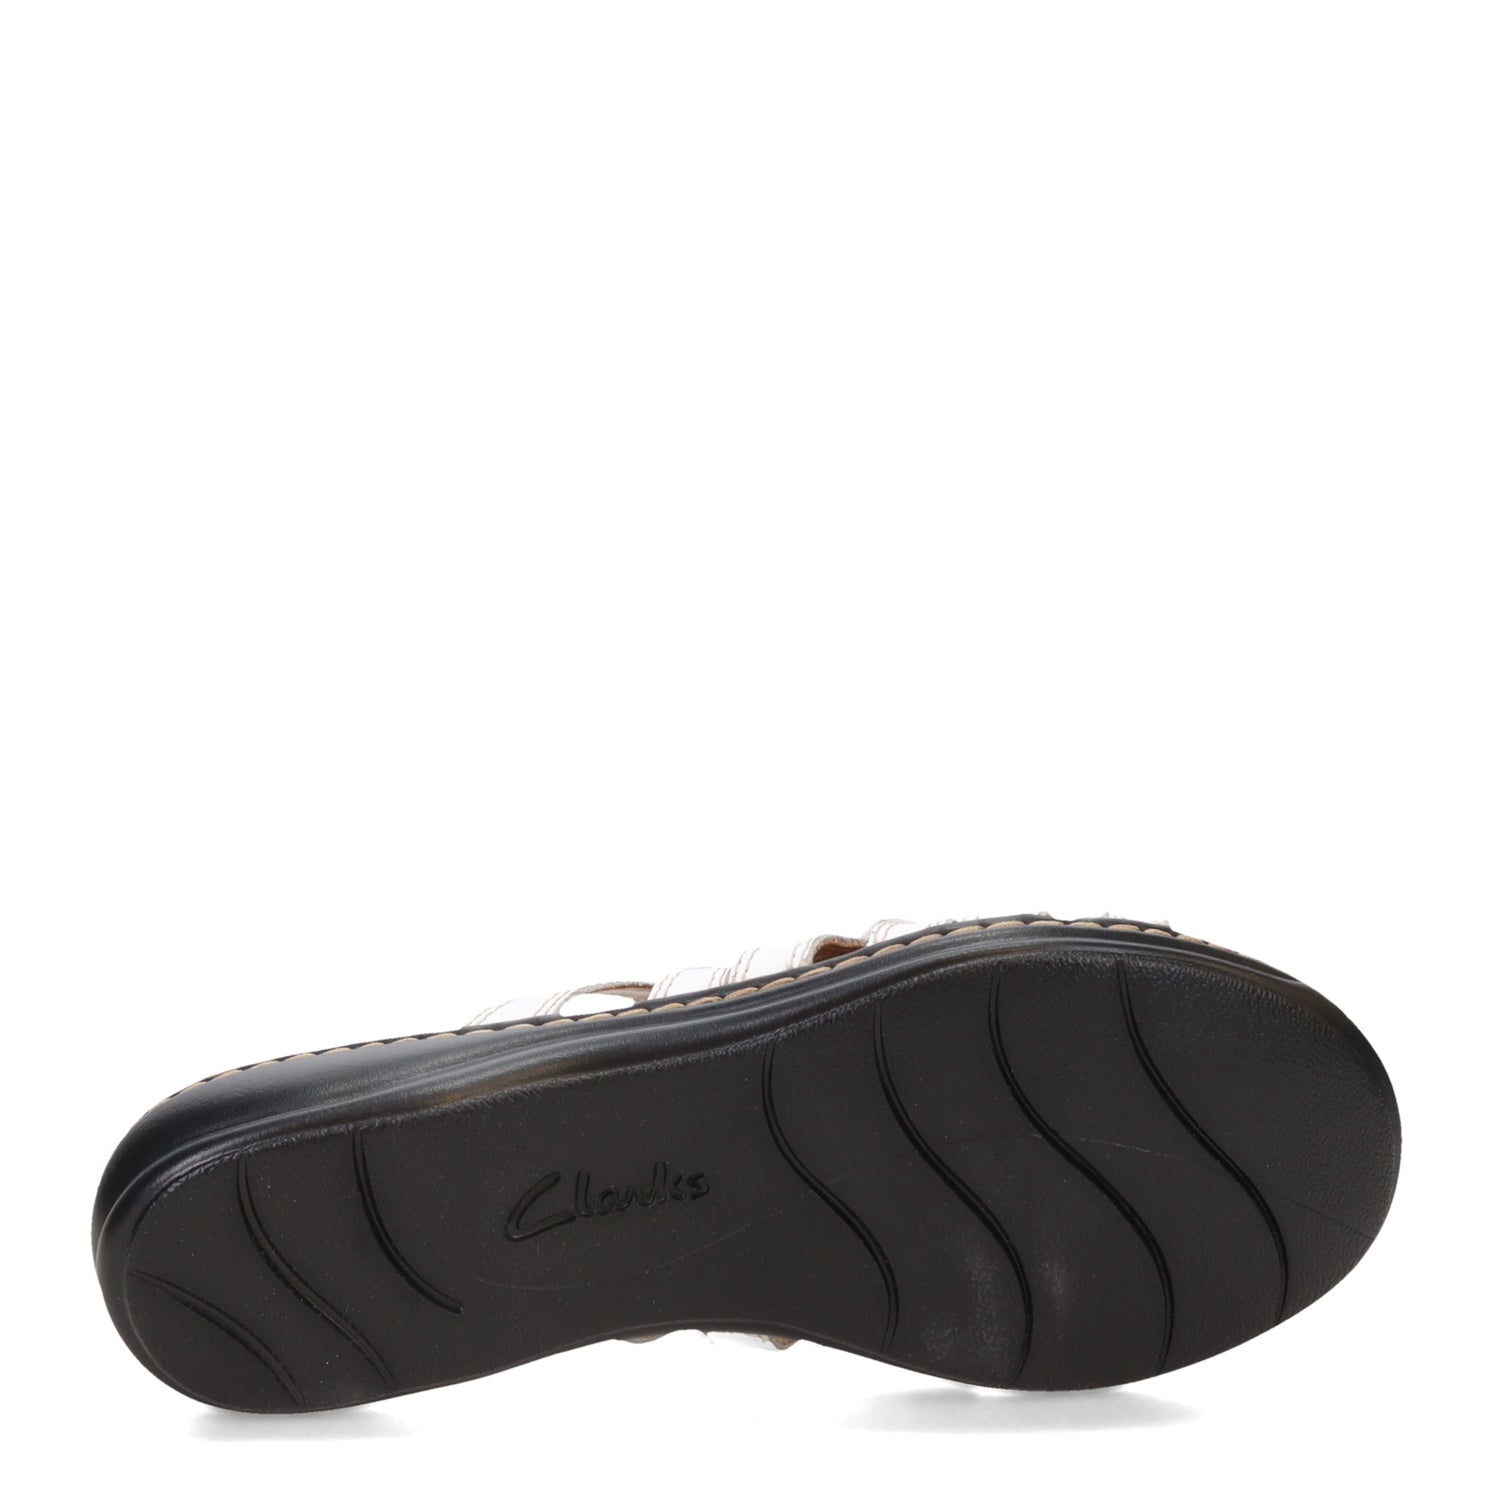 Peltz Shoes  Women's Clarks Lesia Cacti Slide Sandals WHITE 26109039